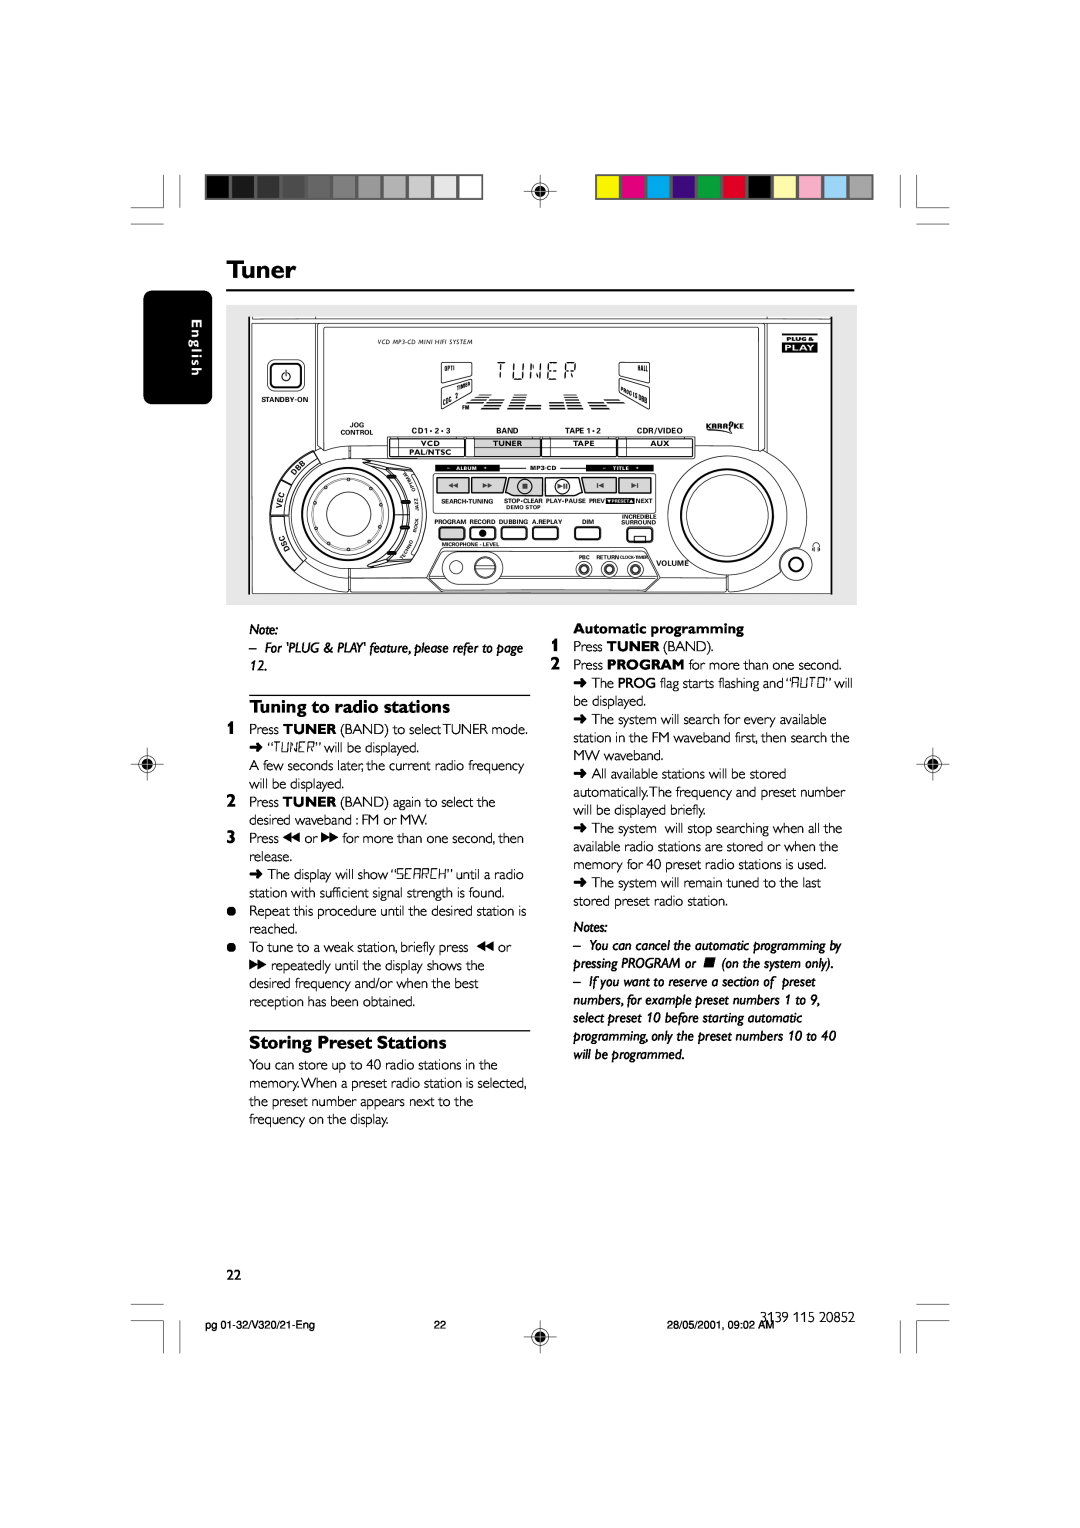 Philips FW-V320/21 manual Tuner, Tuning to radio stations, Storing Preset Stations, lish 